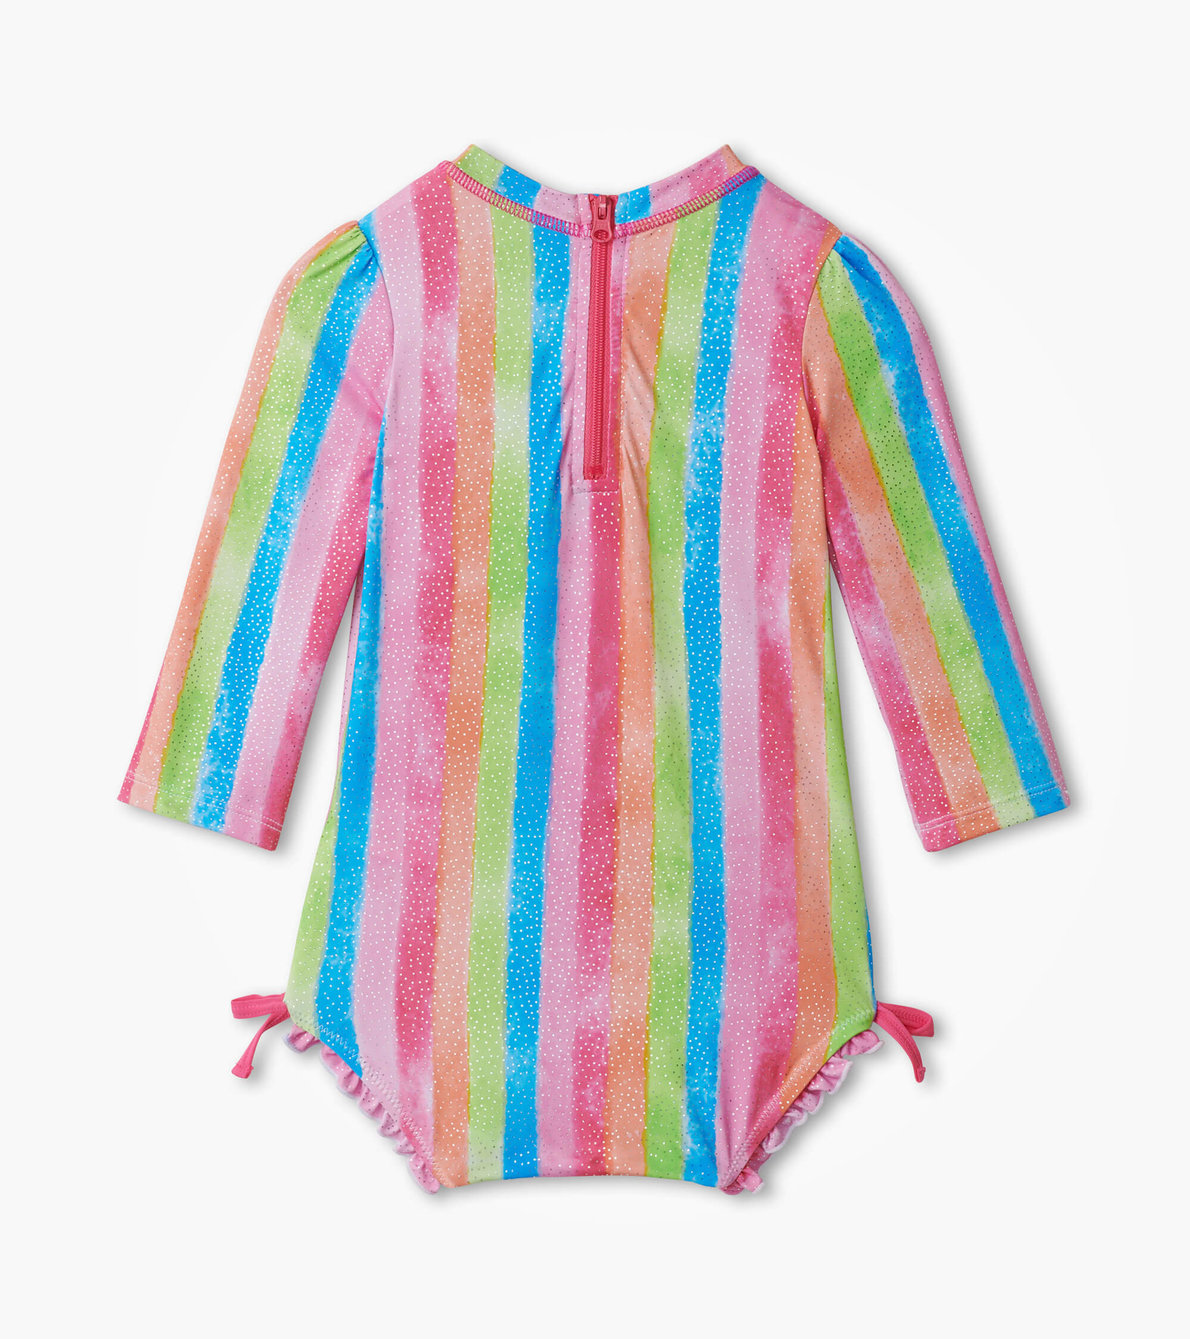 View larger image of Rainbow Stripes Baby Rashguard Swimsuit